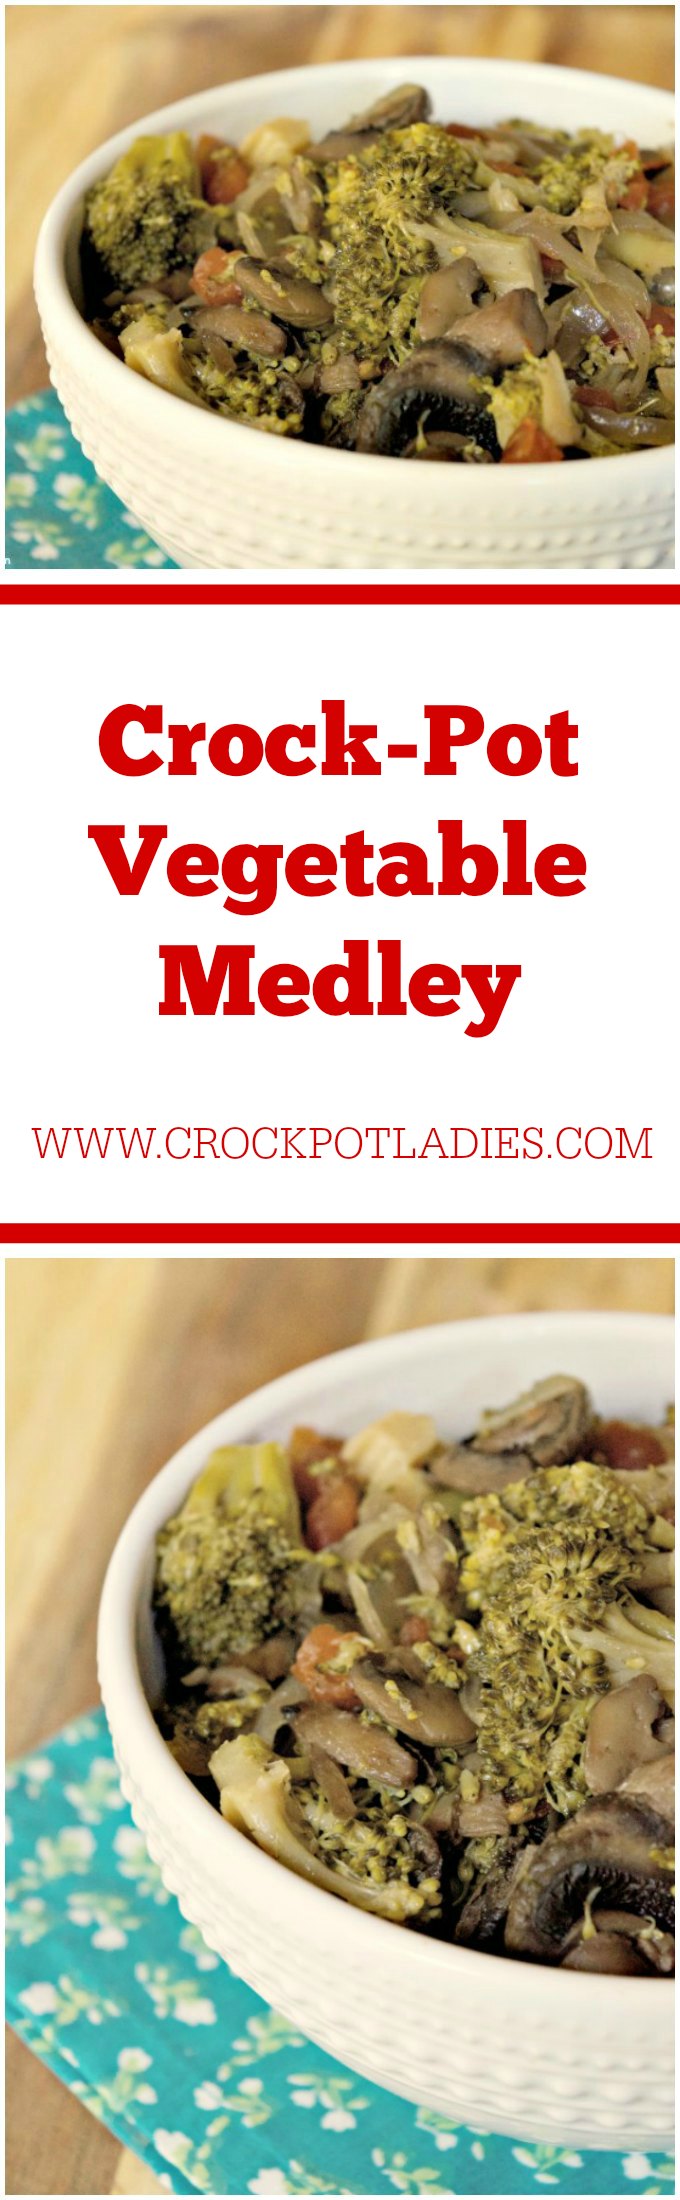 Crock-Pot Vegetable Medley